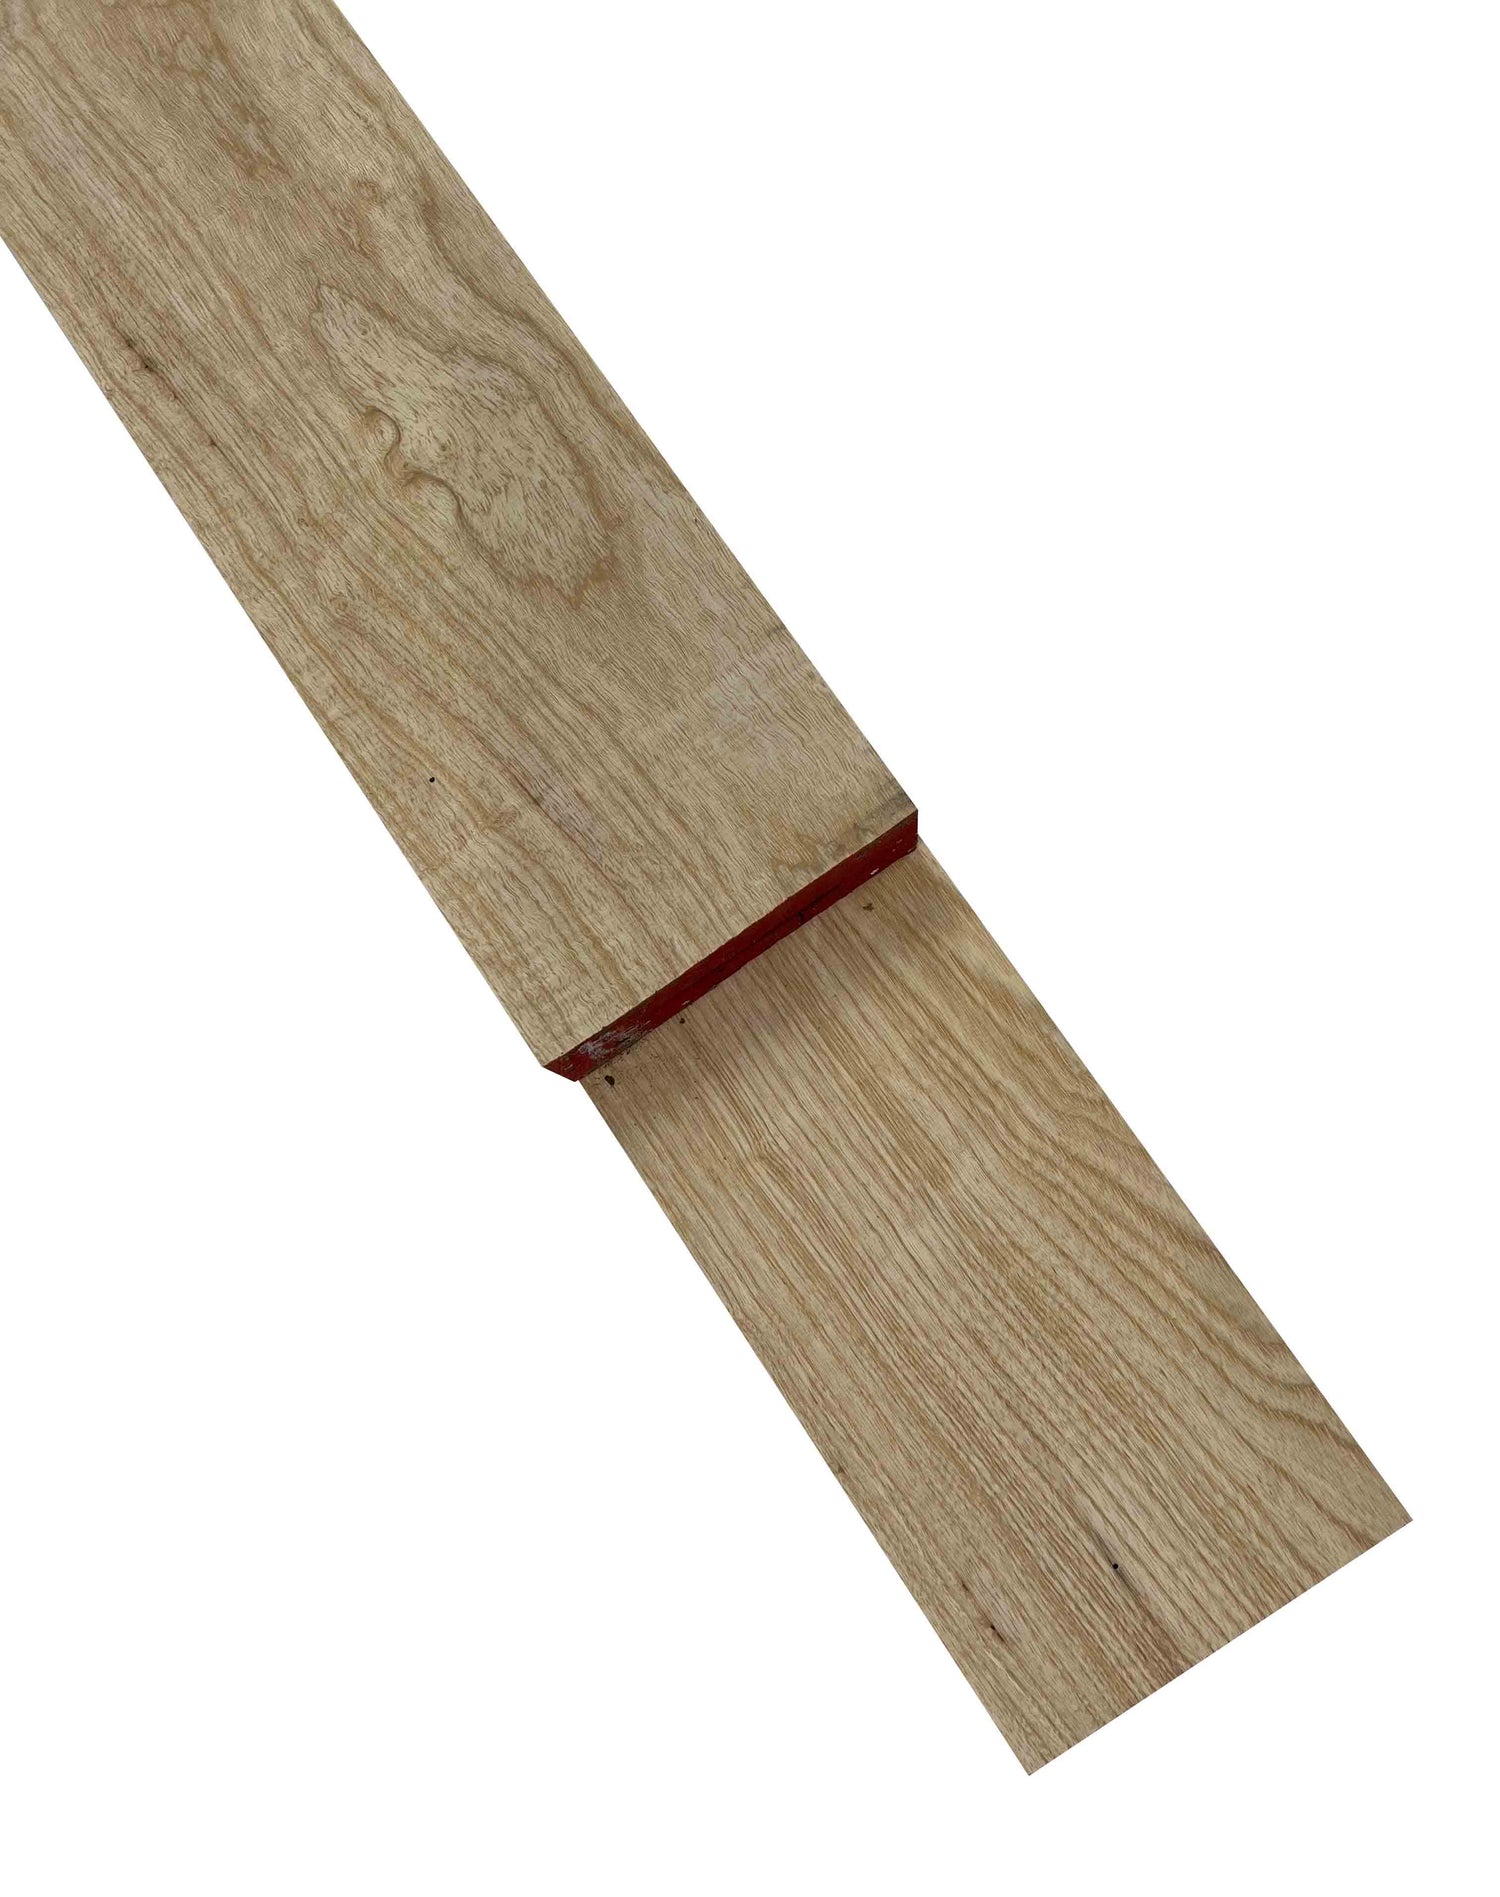 Premium American Hardwood 16/4 White Ash Lumbers - Exotic Wood Zone - Buy online Across USA 